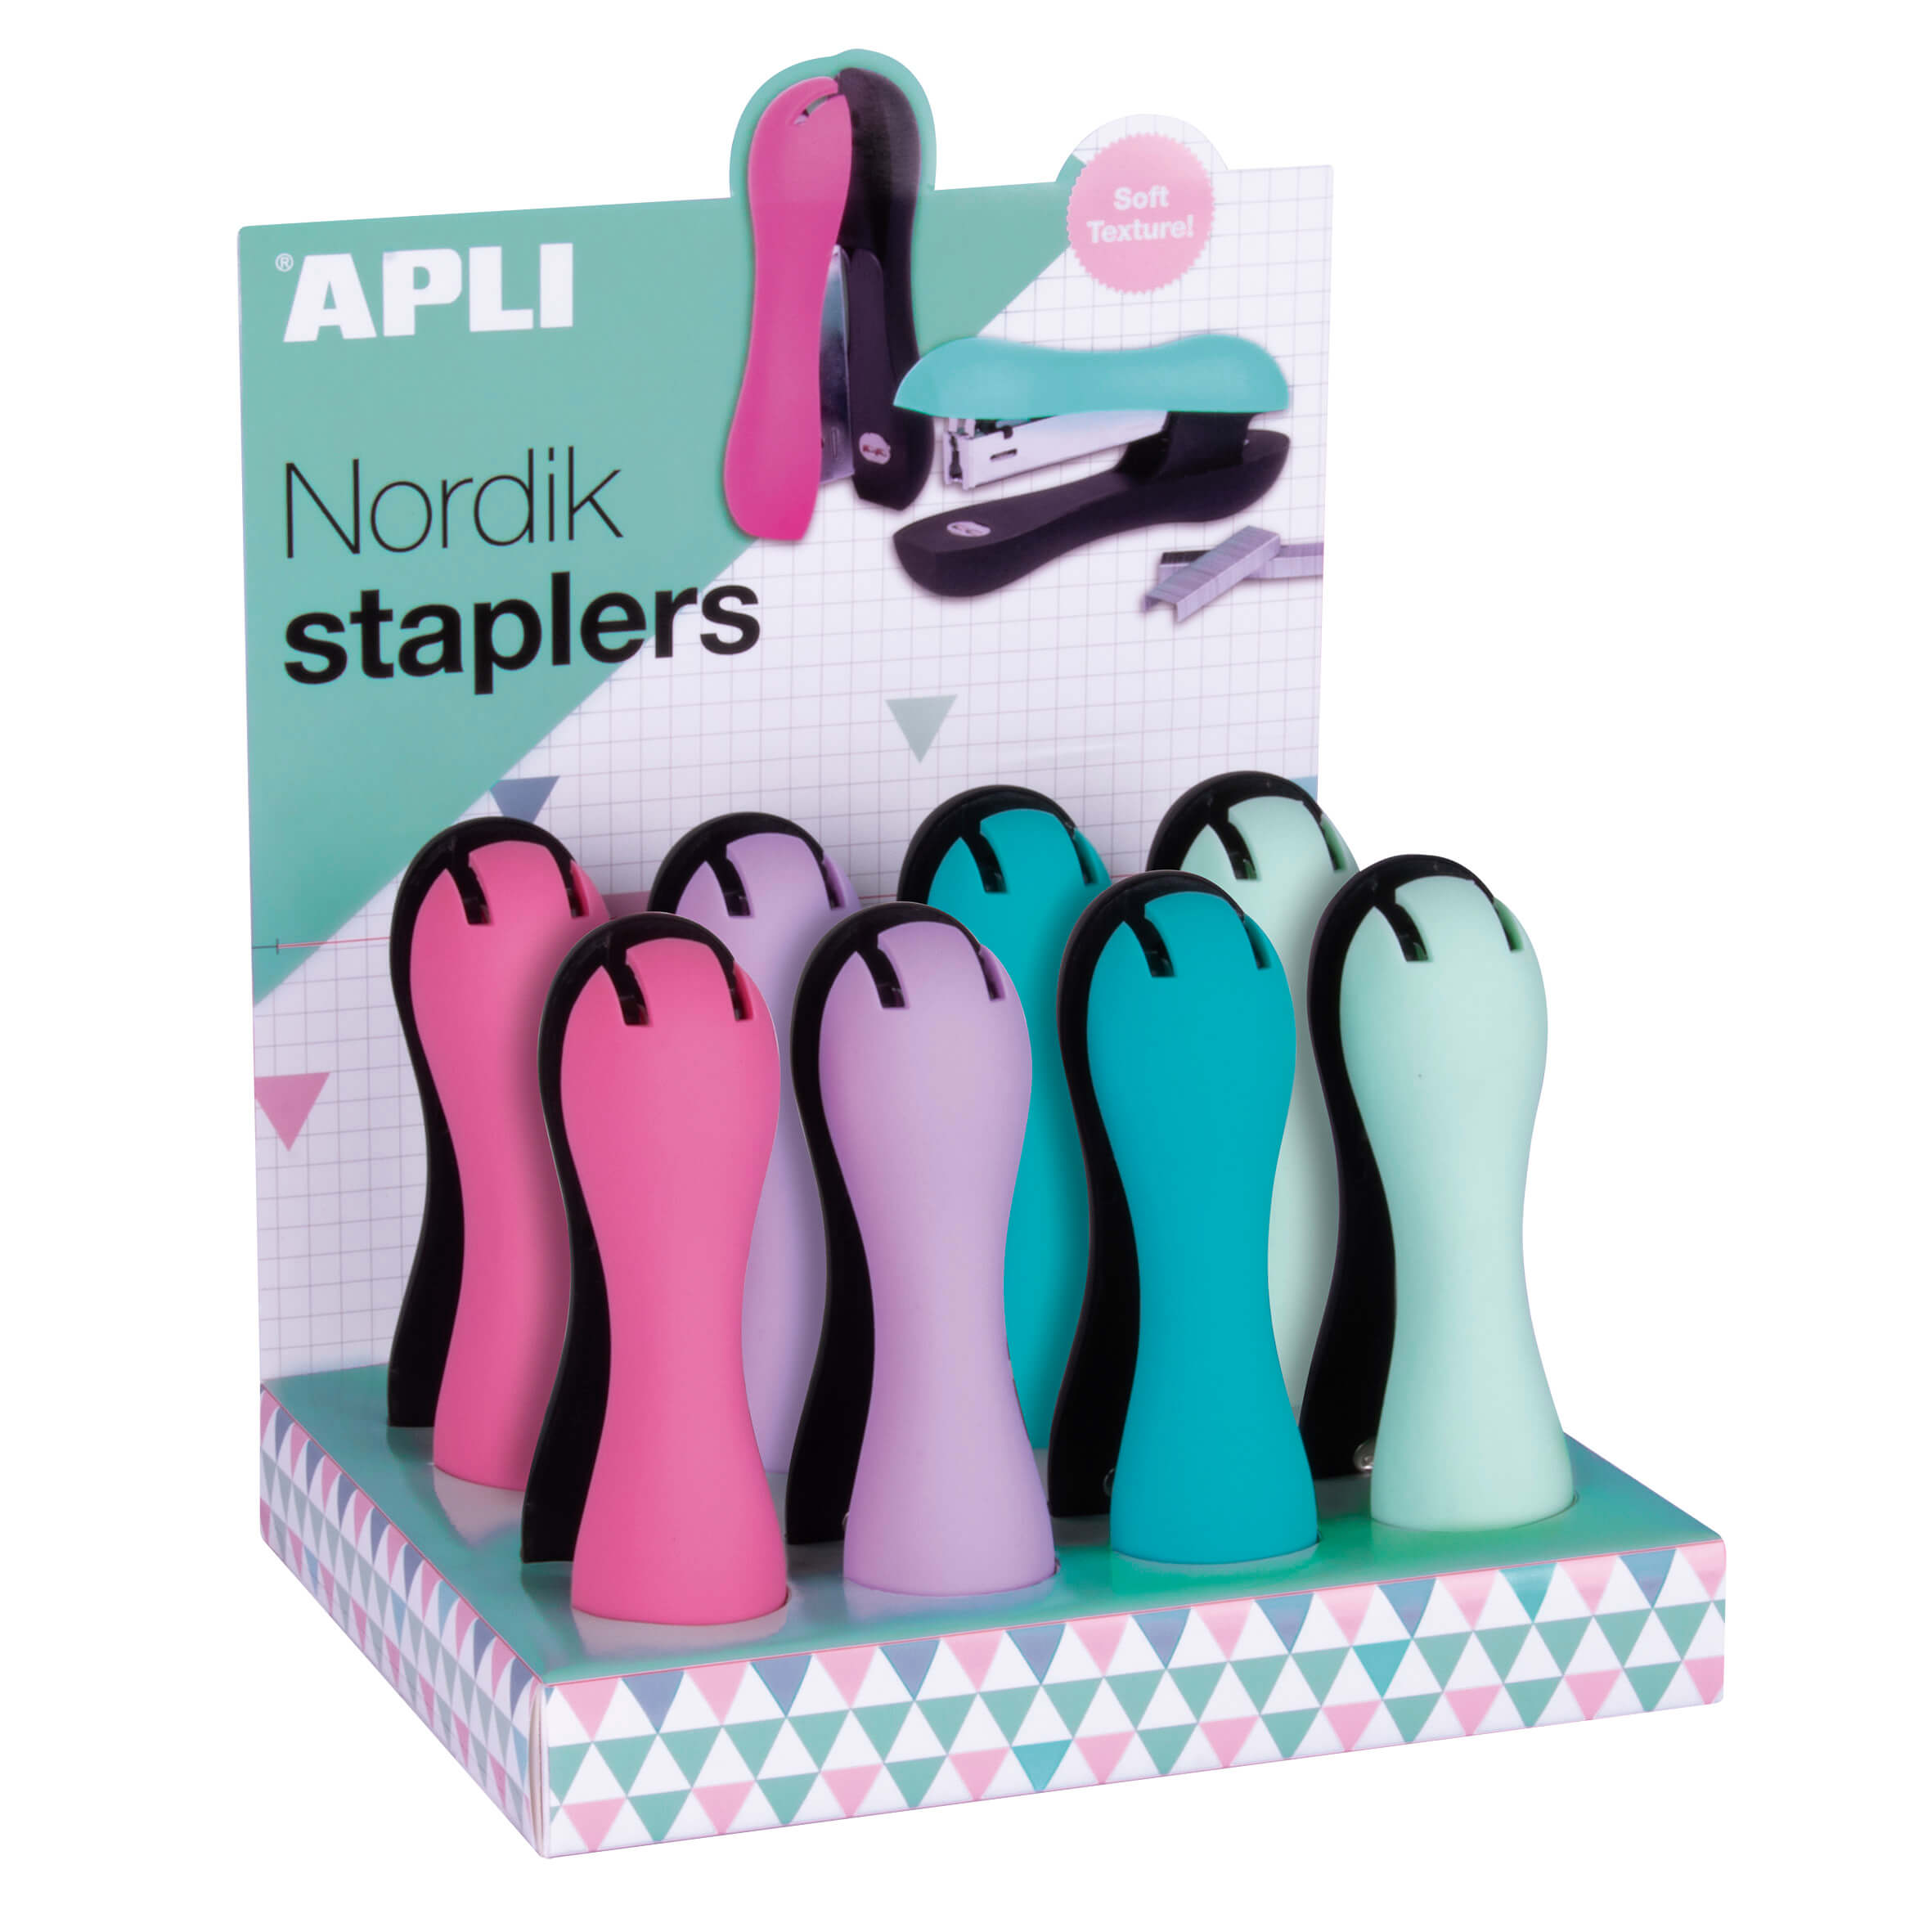 Apli Nordik Collection Grapadora Ergonomica Soft - Grapas Nº22/6-24/6 - Capacidad de 40 Hojas - Horizontal/Vertical - Expositor 8 Unidades Colores Pastel